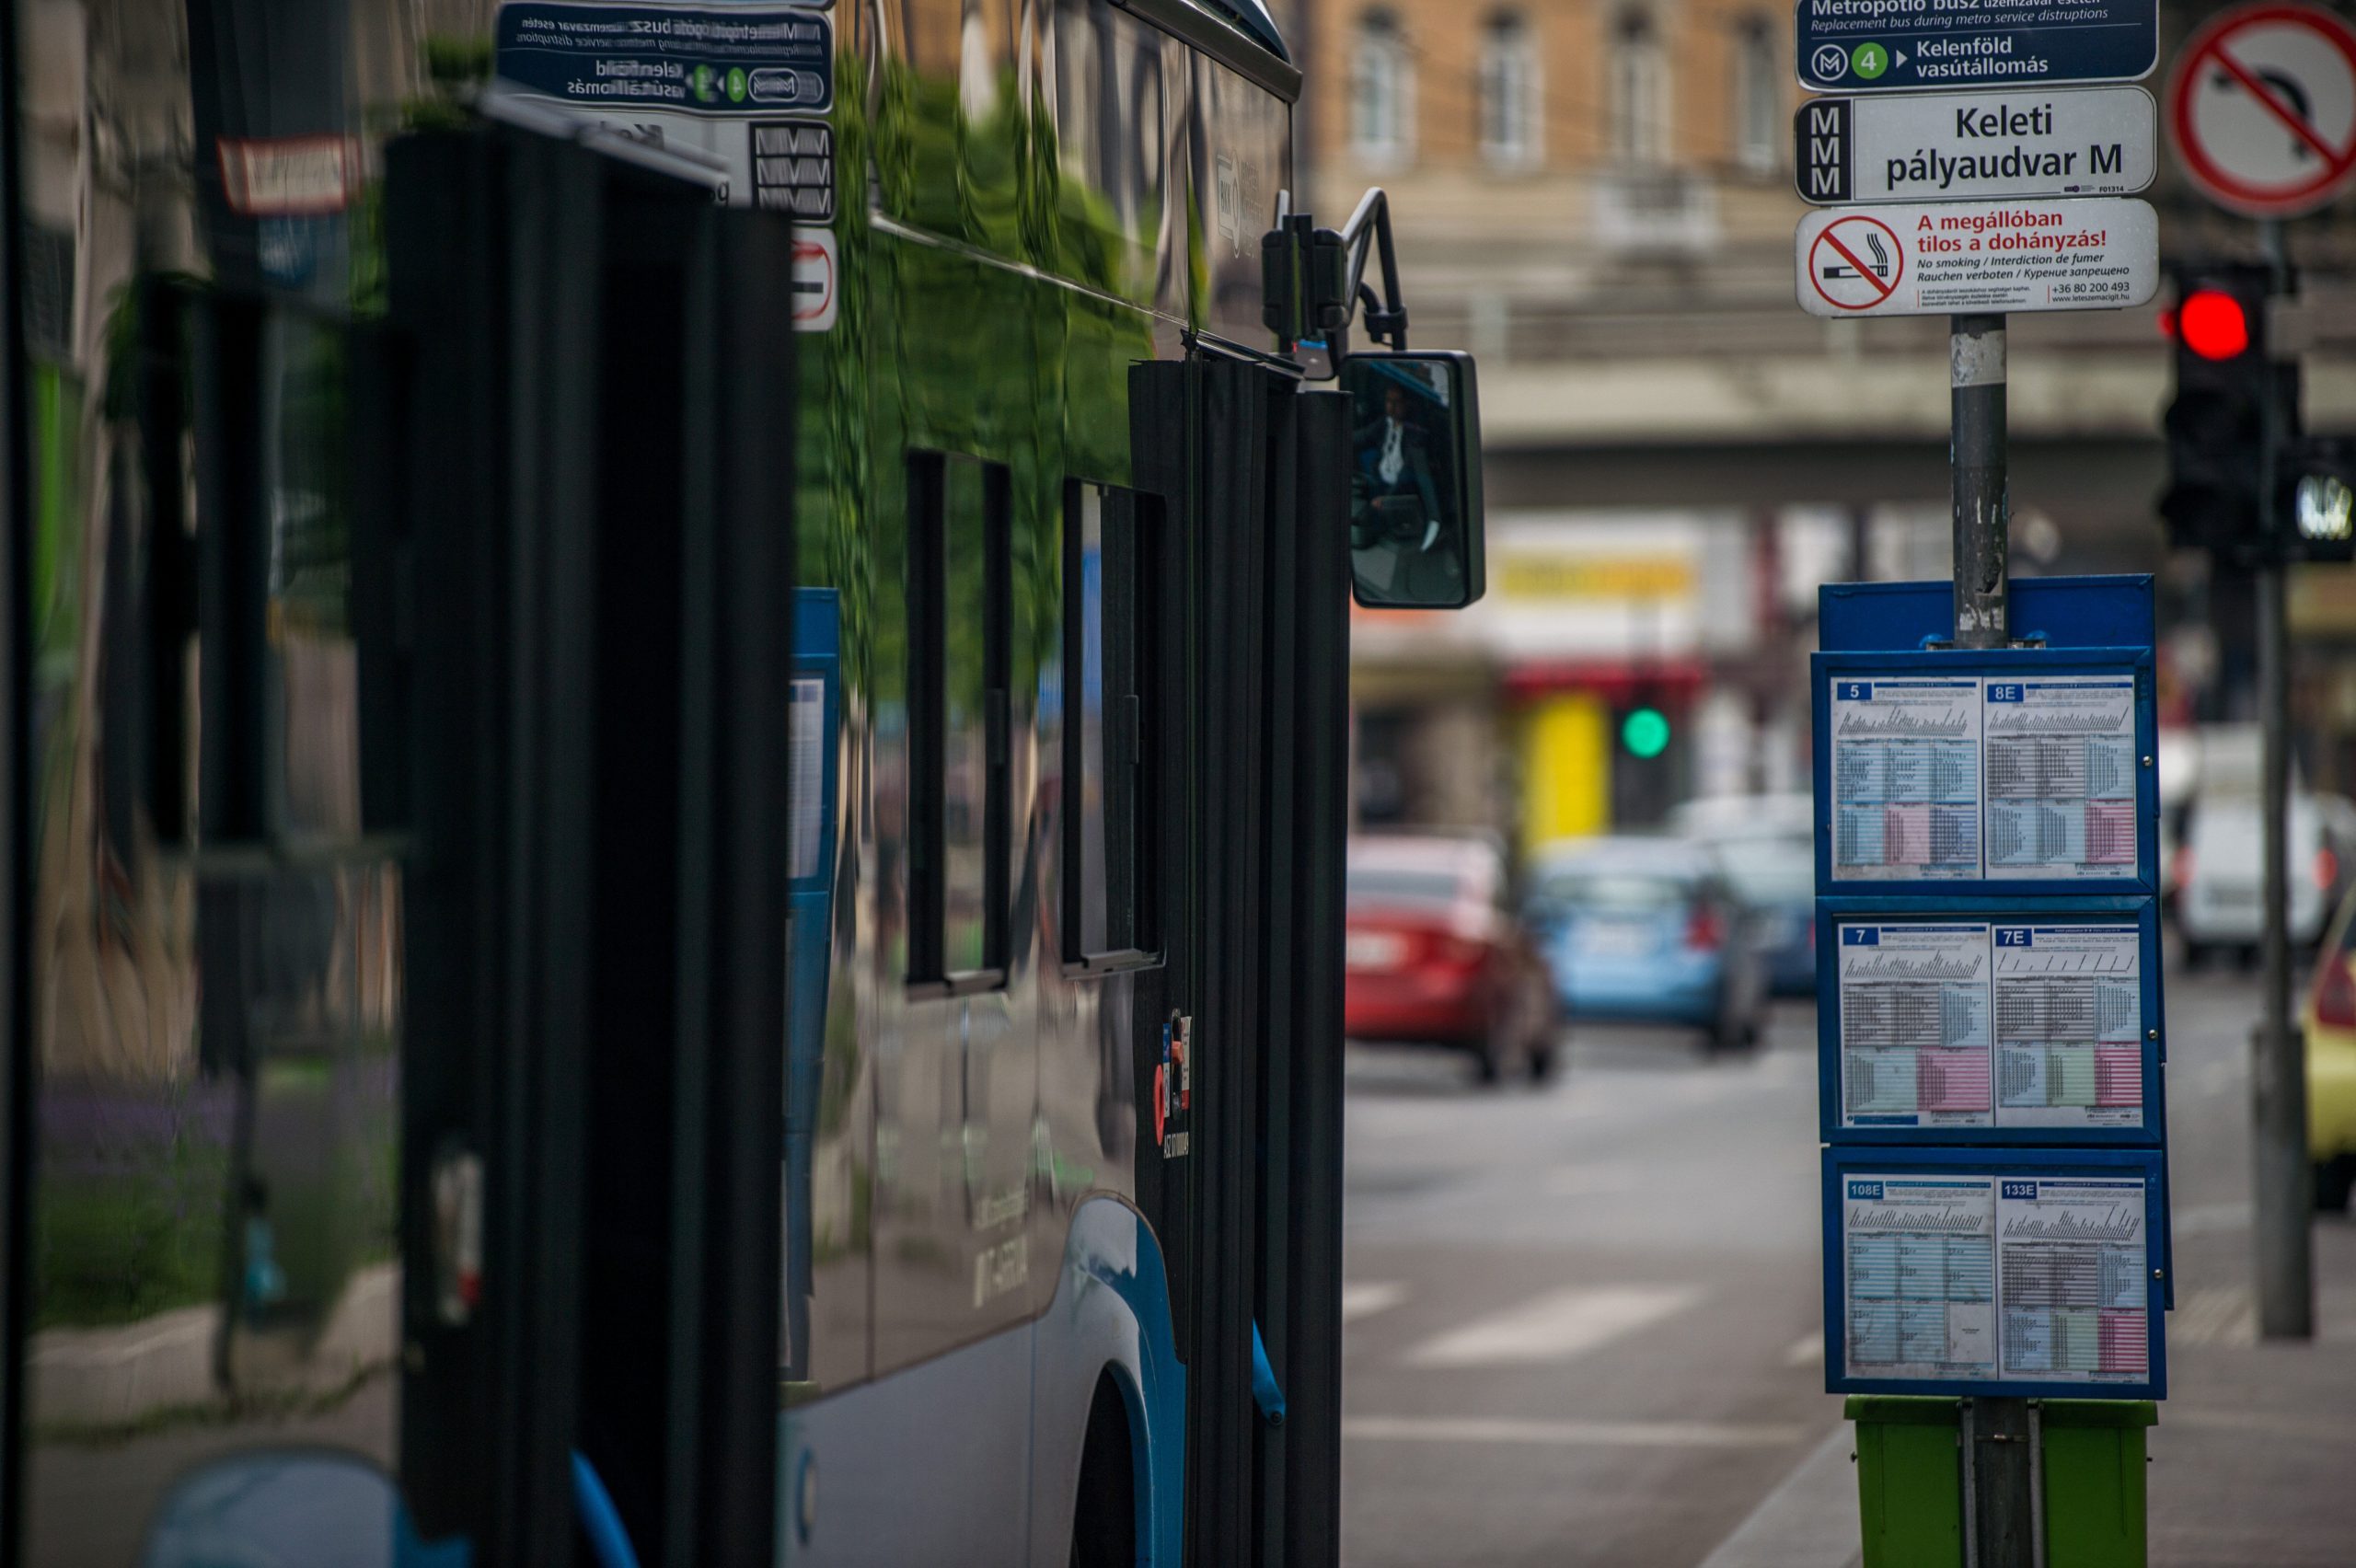 Budapest Public Transportation Tests QR Code for Checking Bus Arrivals